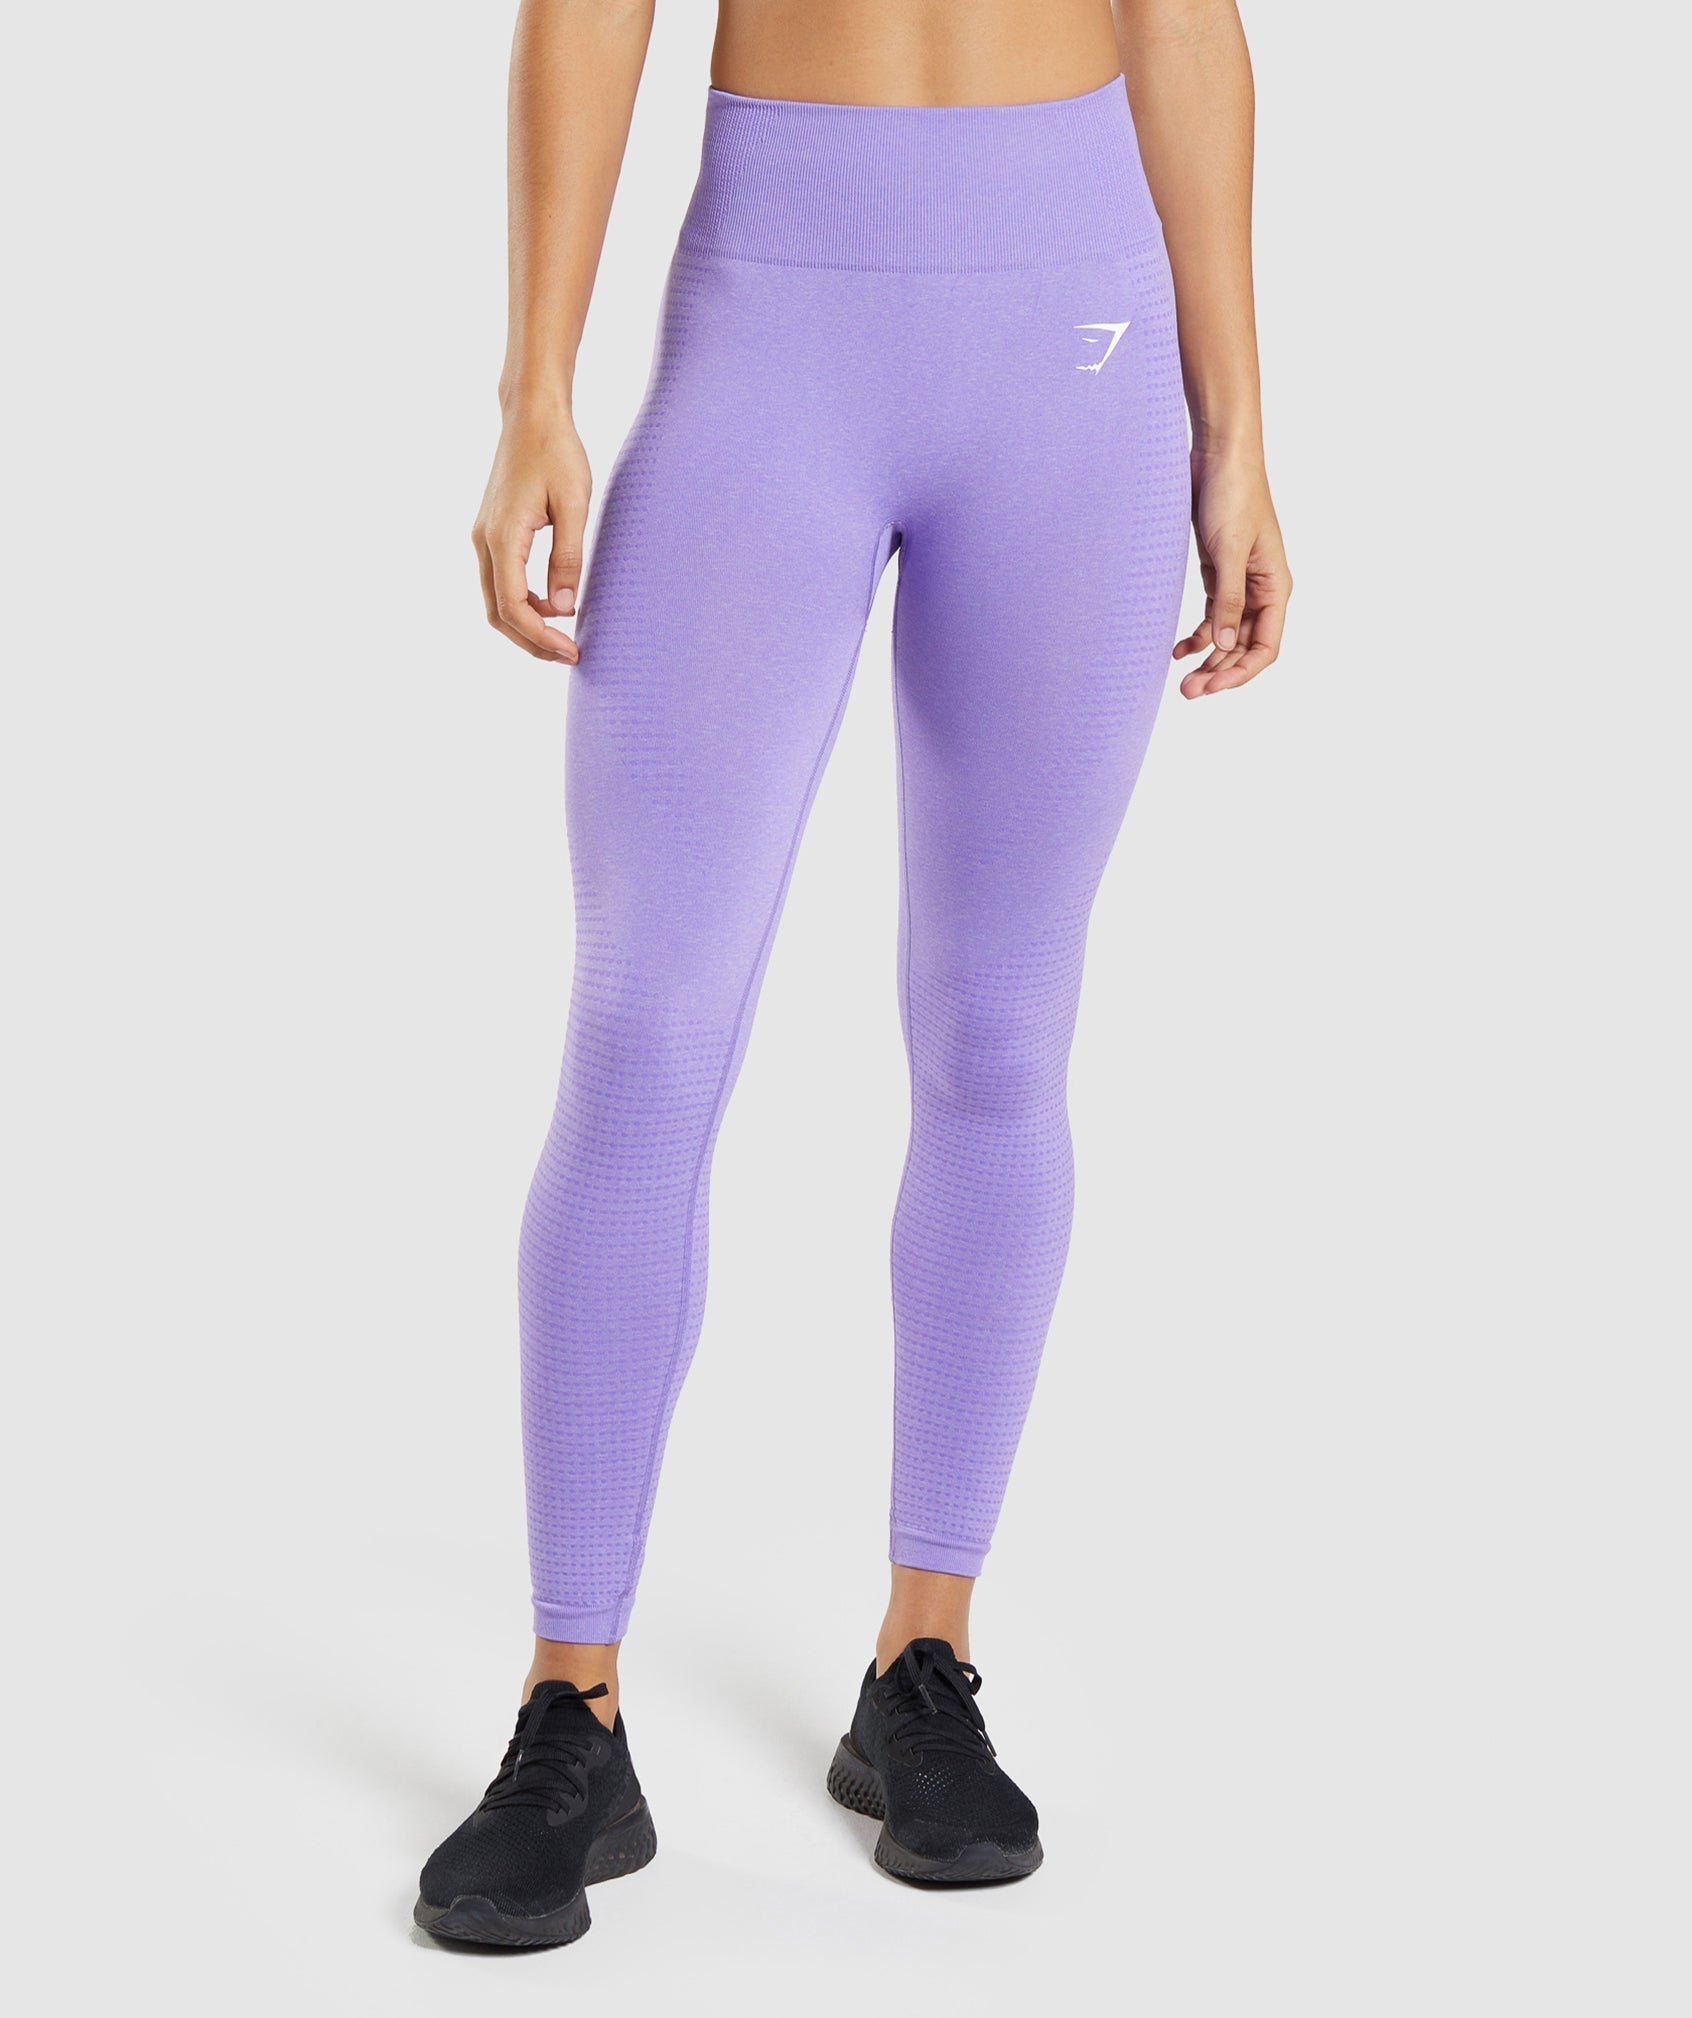 Gymshark purple seamless leggings size M